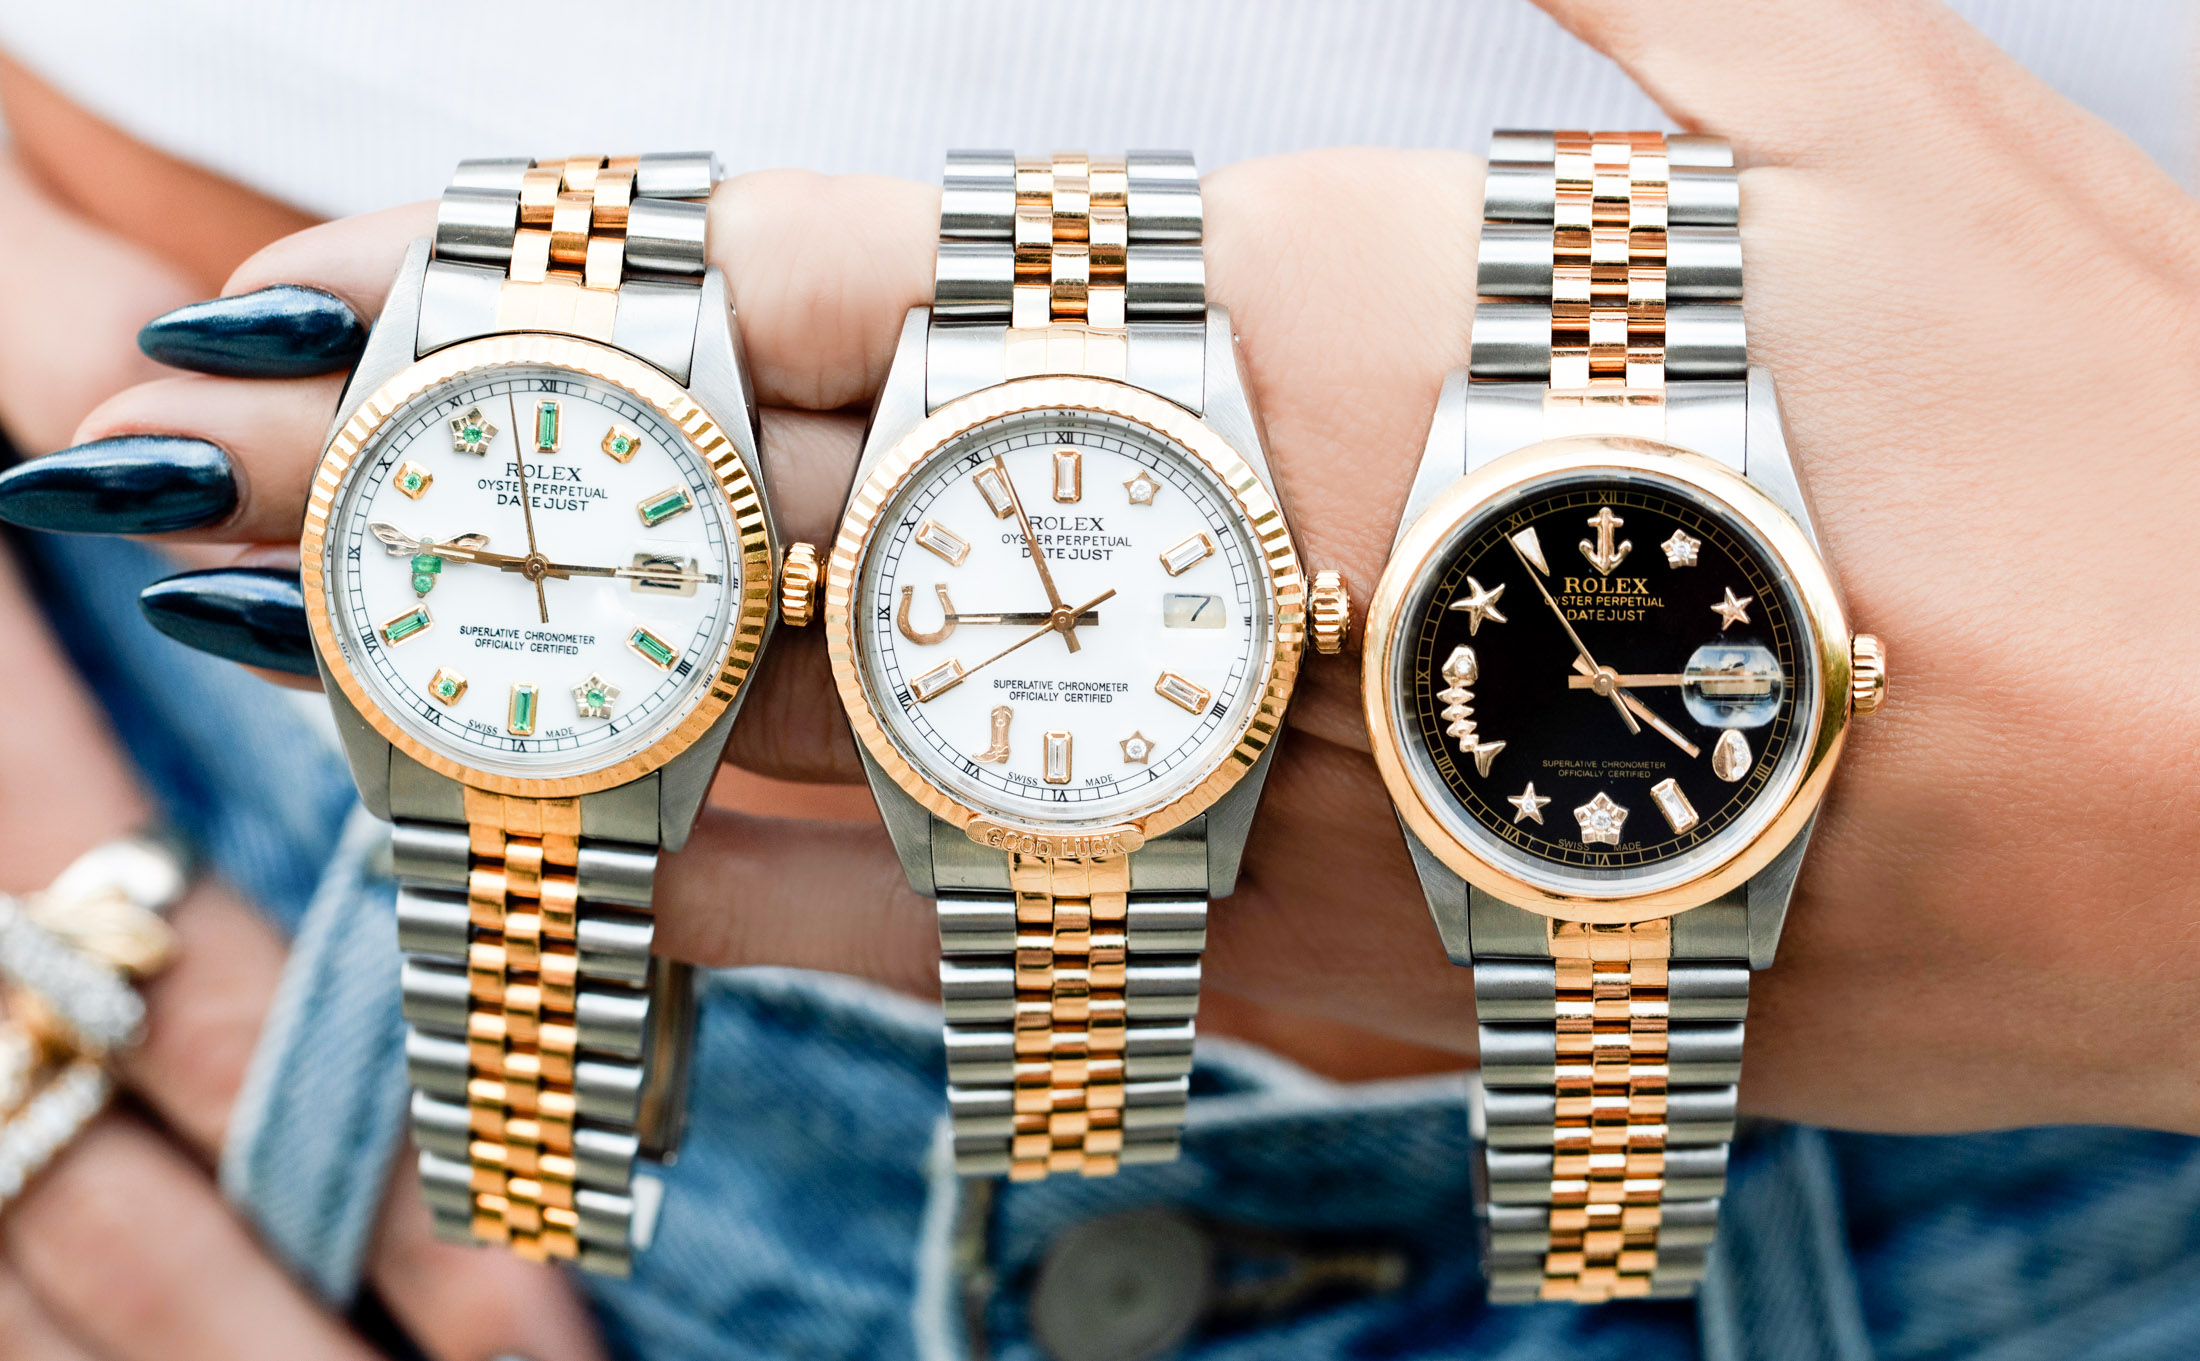 NIB Brazen Sports Luxury Watch | Luxury watch, Luxury, Watches